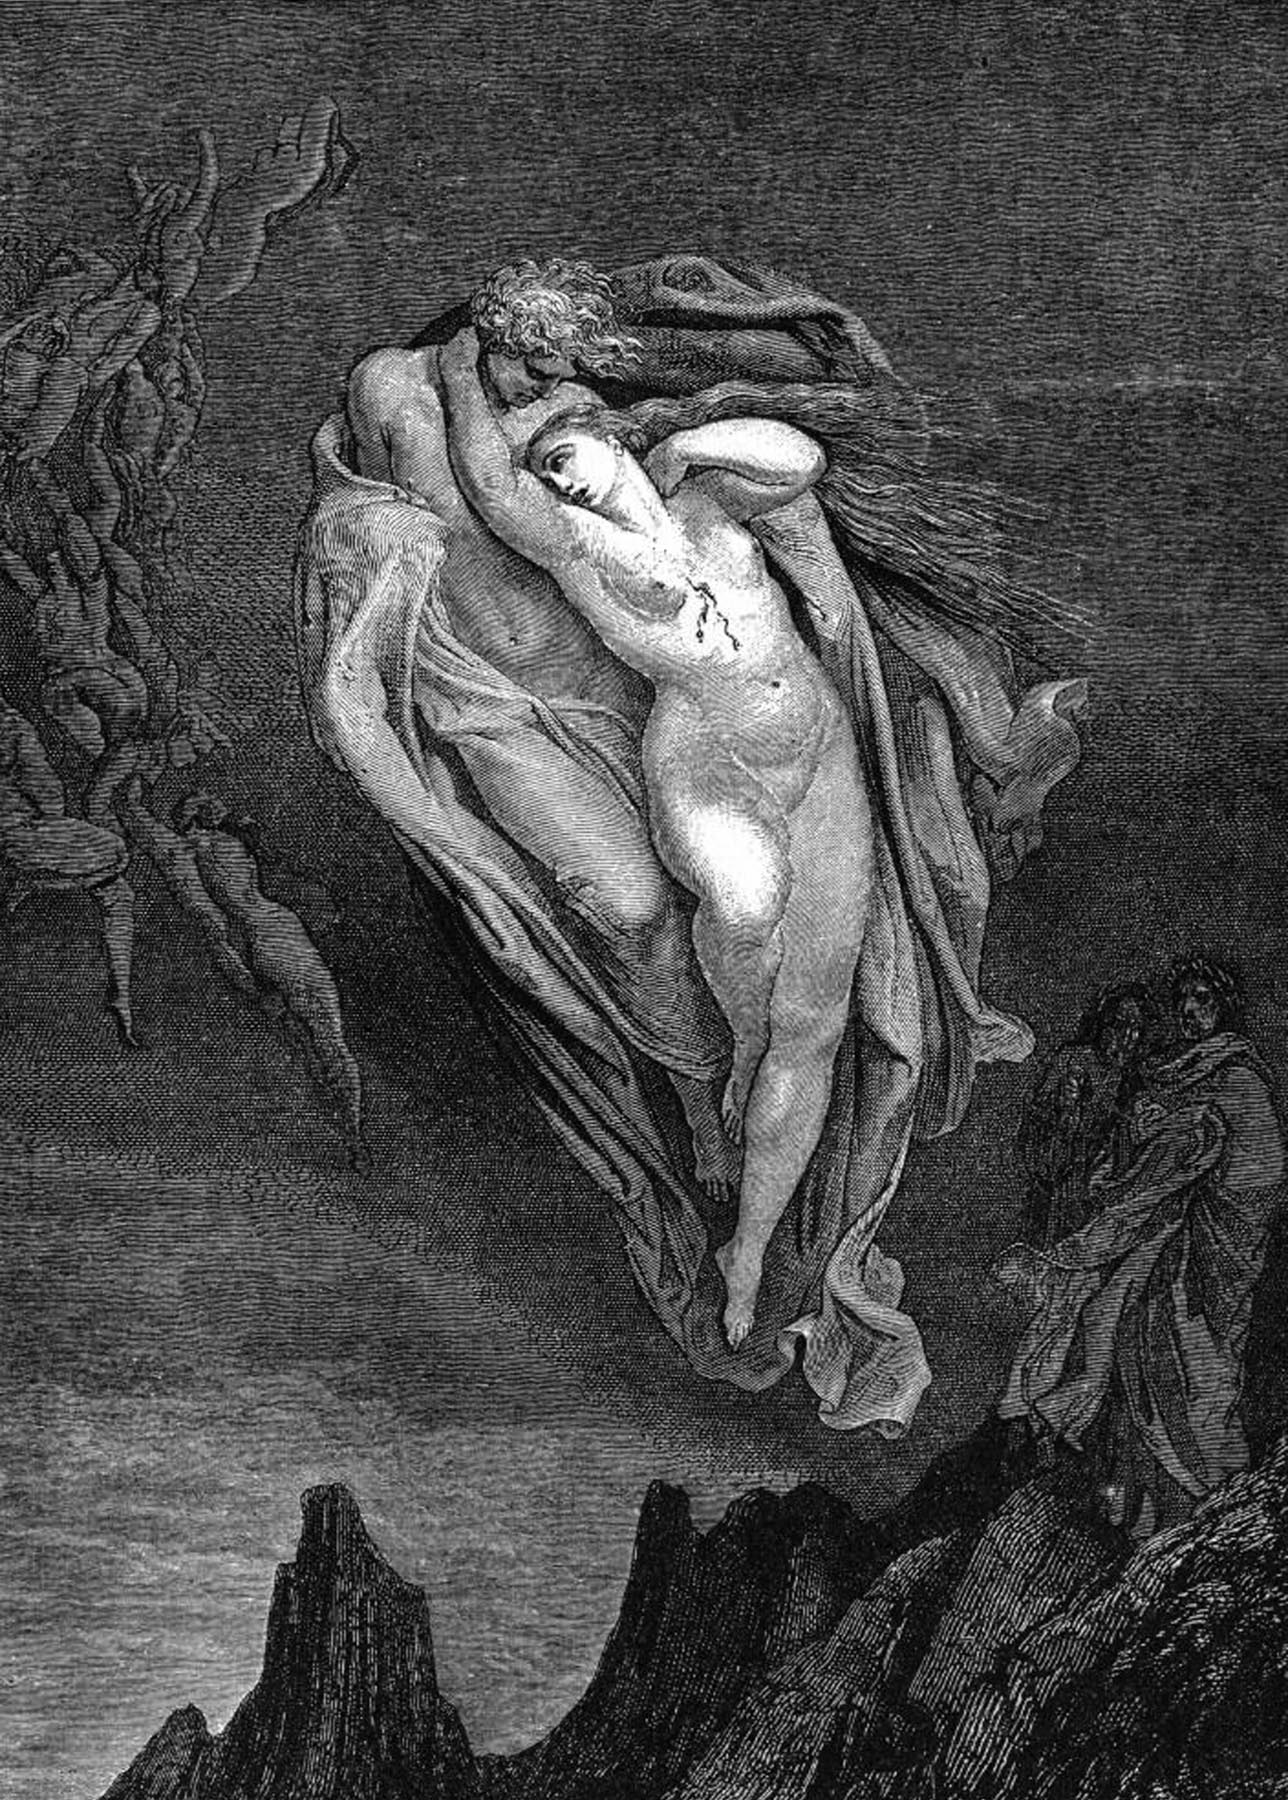 The Divine Comedy, Volume 1: Inferno by Dante Alighieri